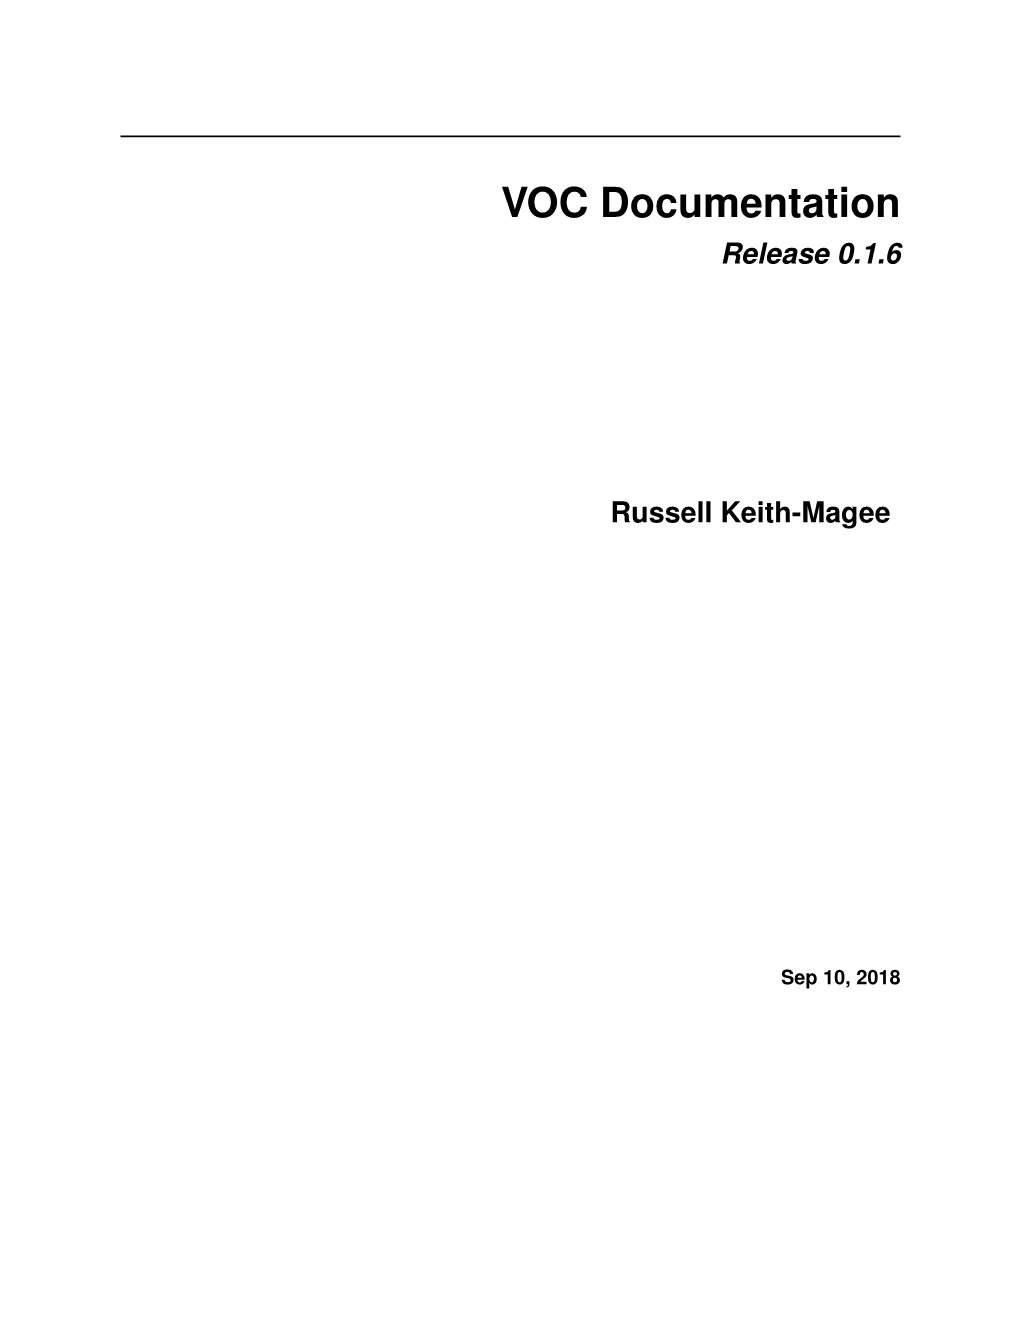 VOC Documentation Release 0.1.6